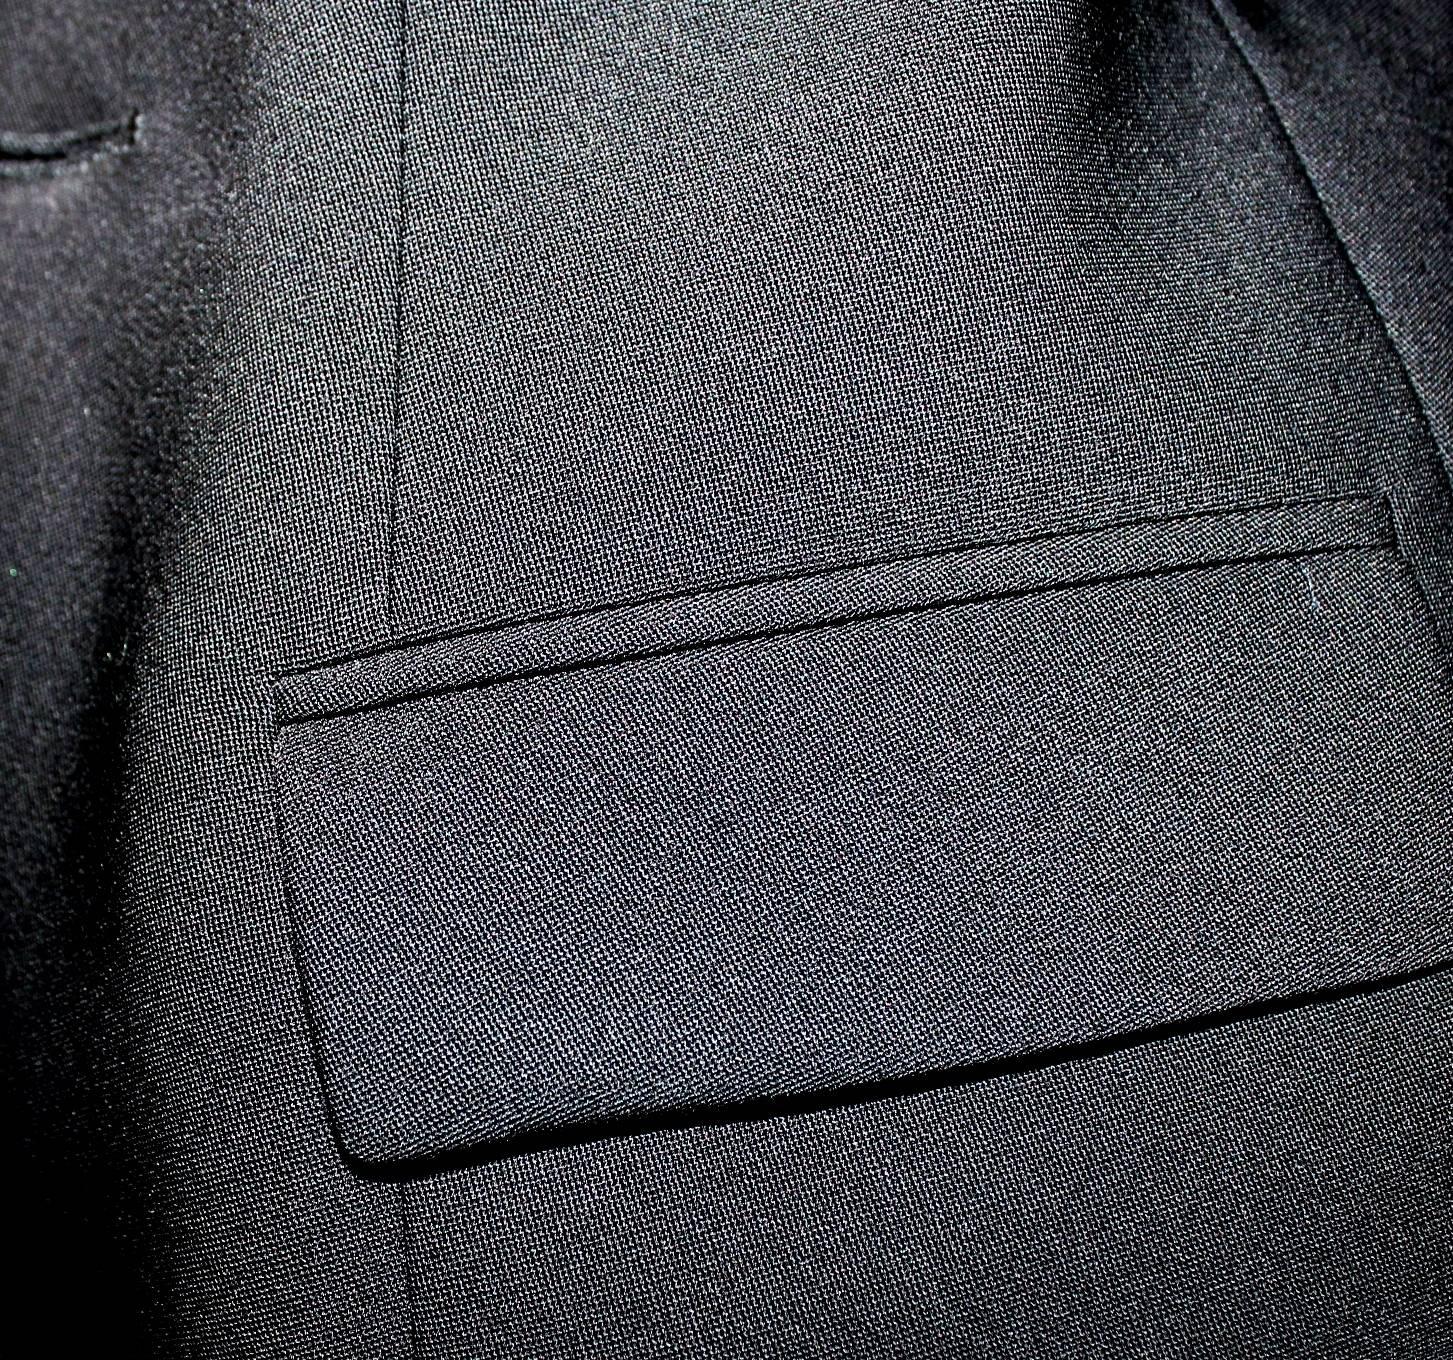 Black YSL Yves Saint Laurent by Tom Ford Evening Blazer Jacket Ribbon Details 2